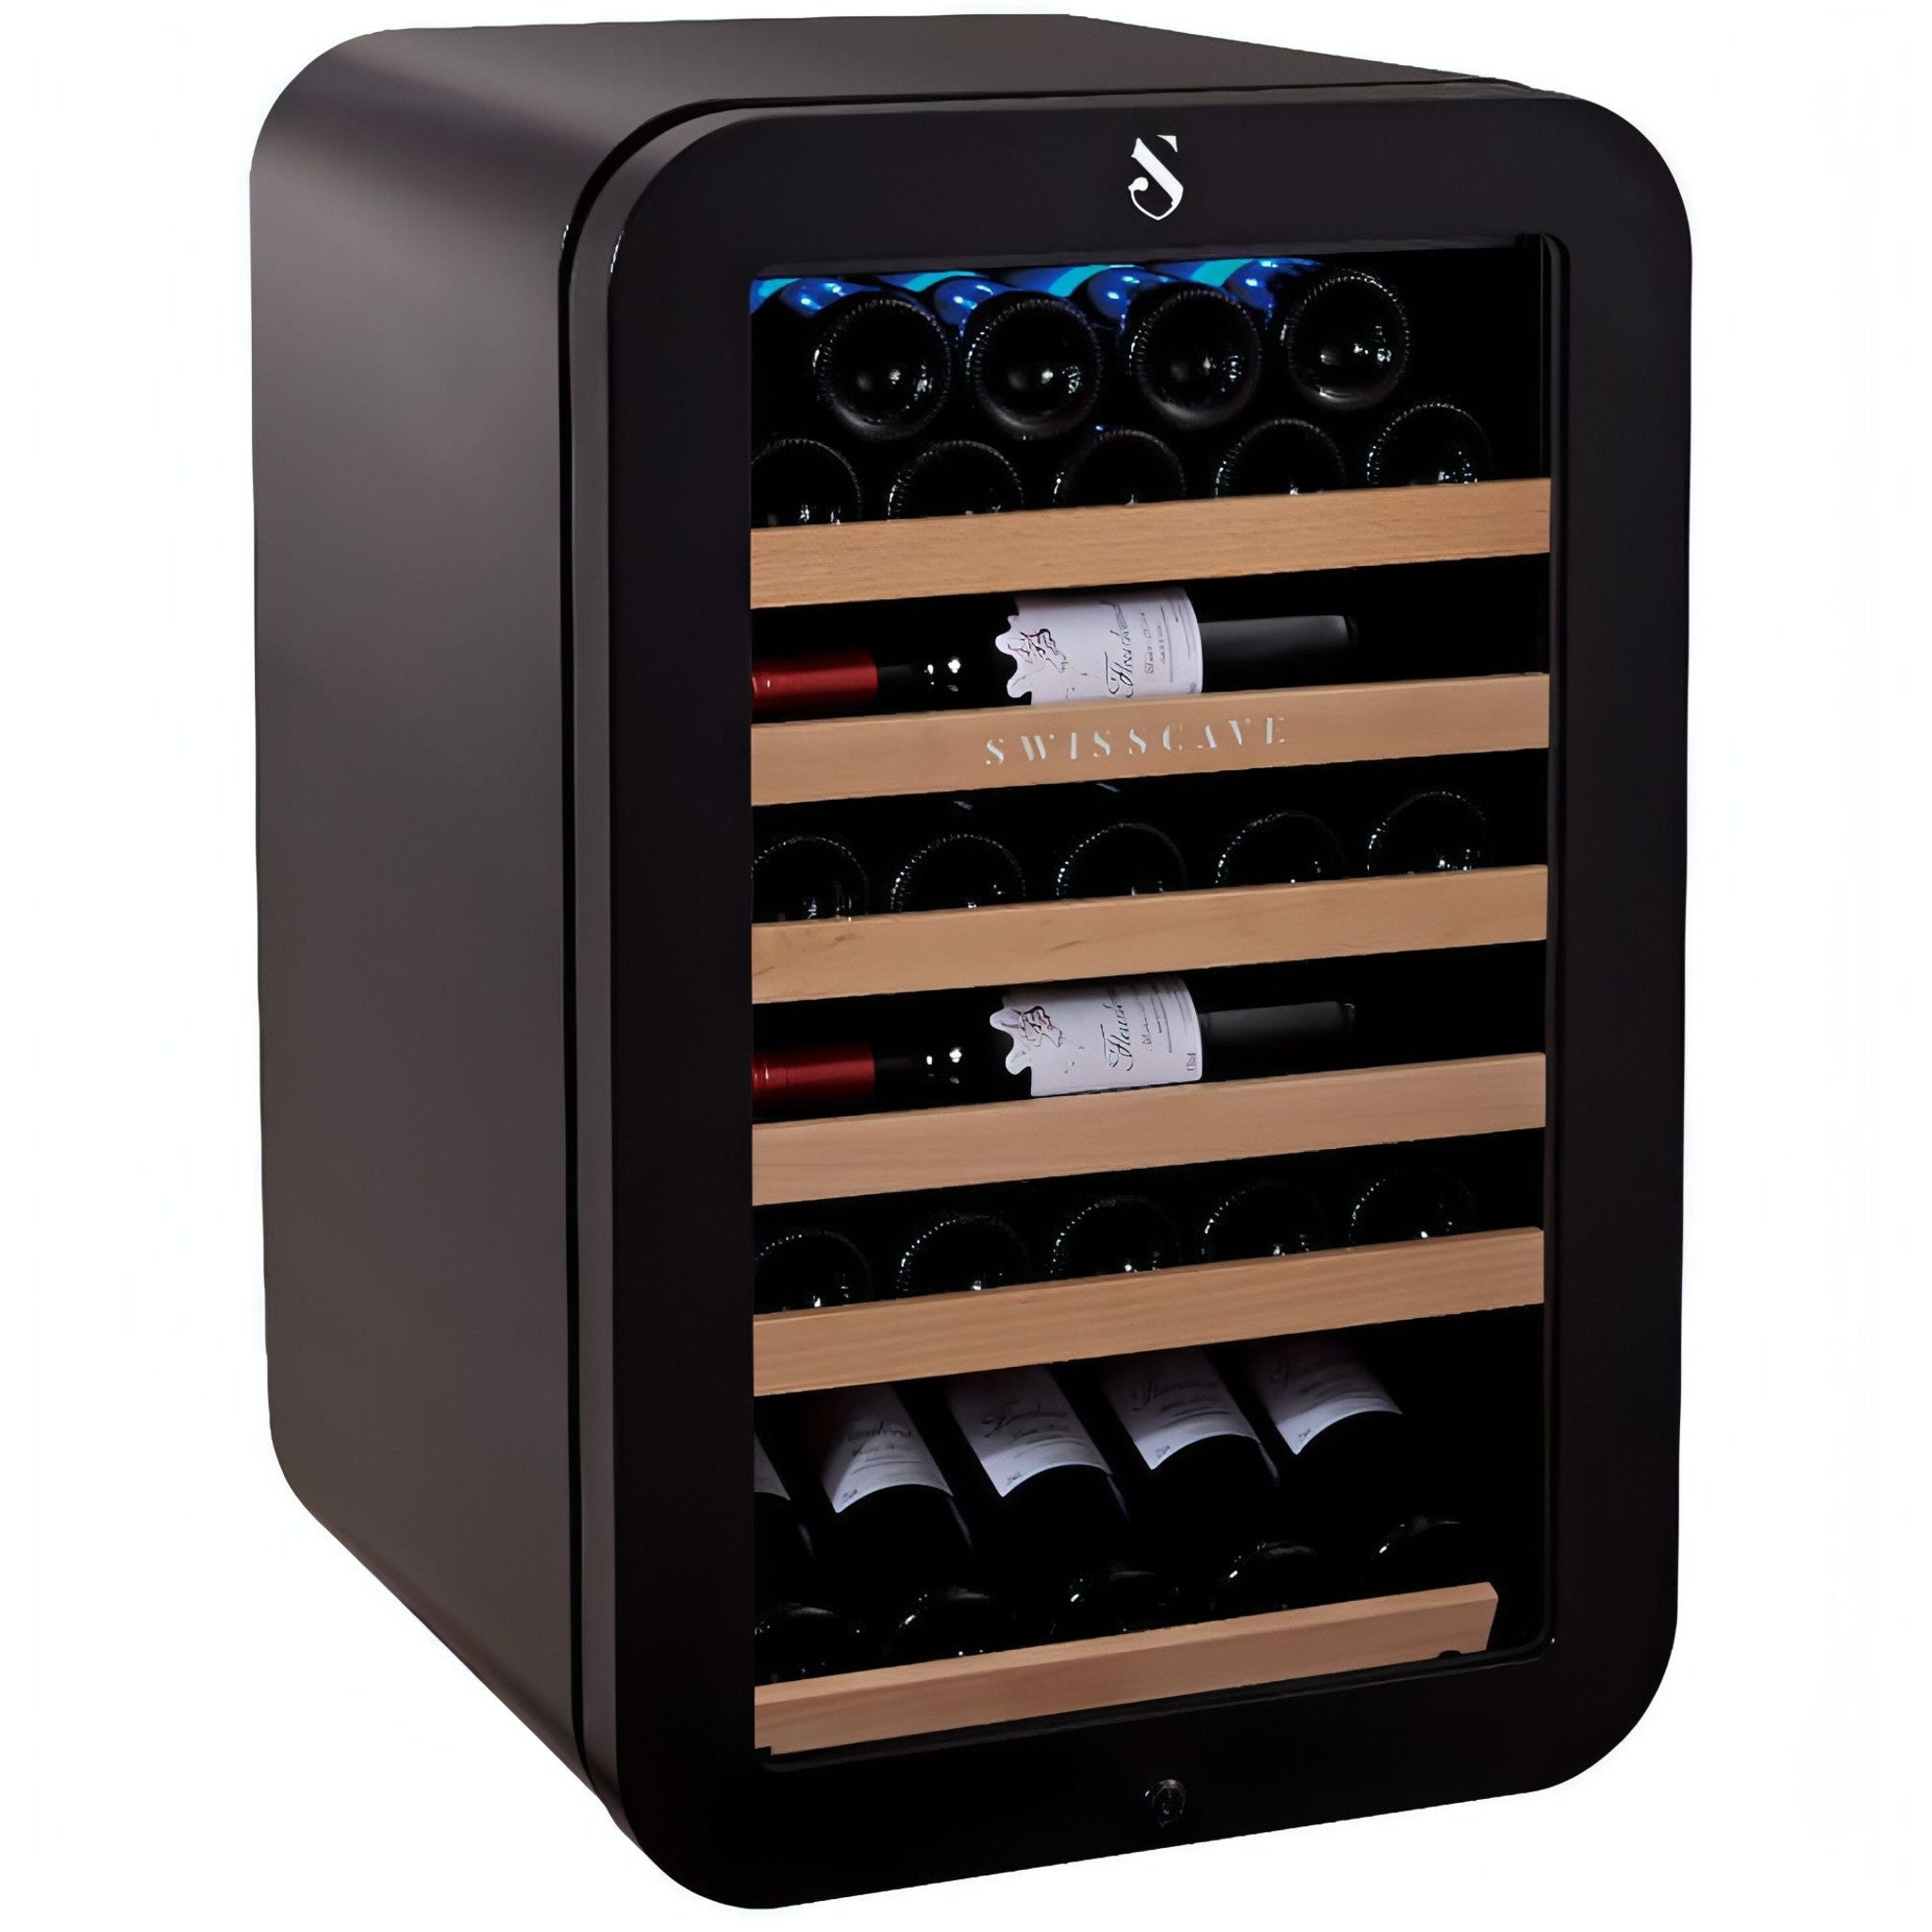 SWISSCAVE - 35 Bottle Single Temperature Zone Wine Cooler - WL120F